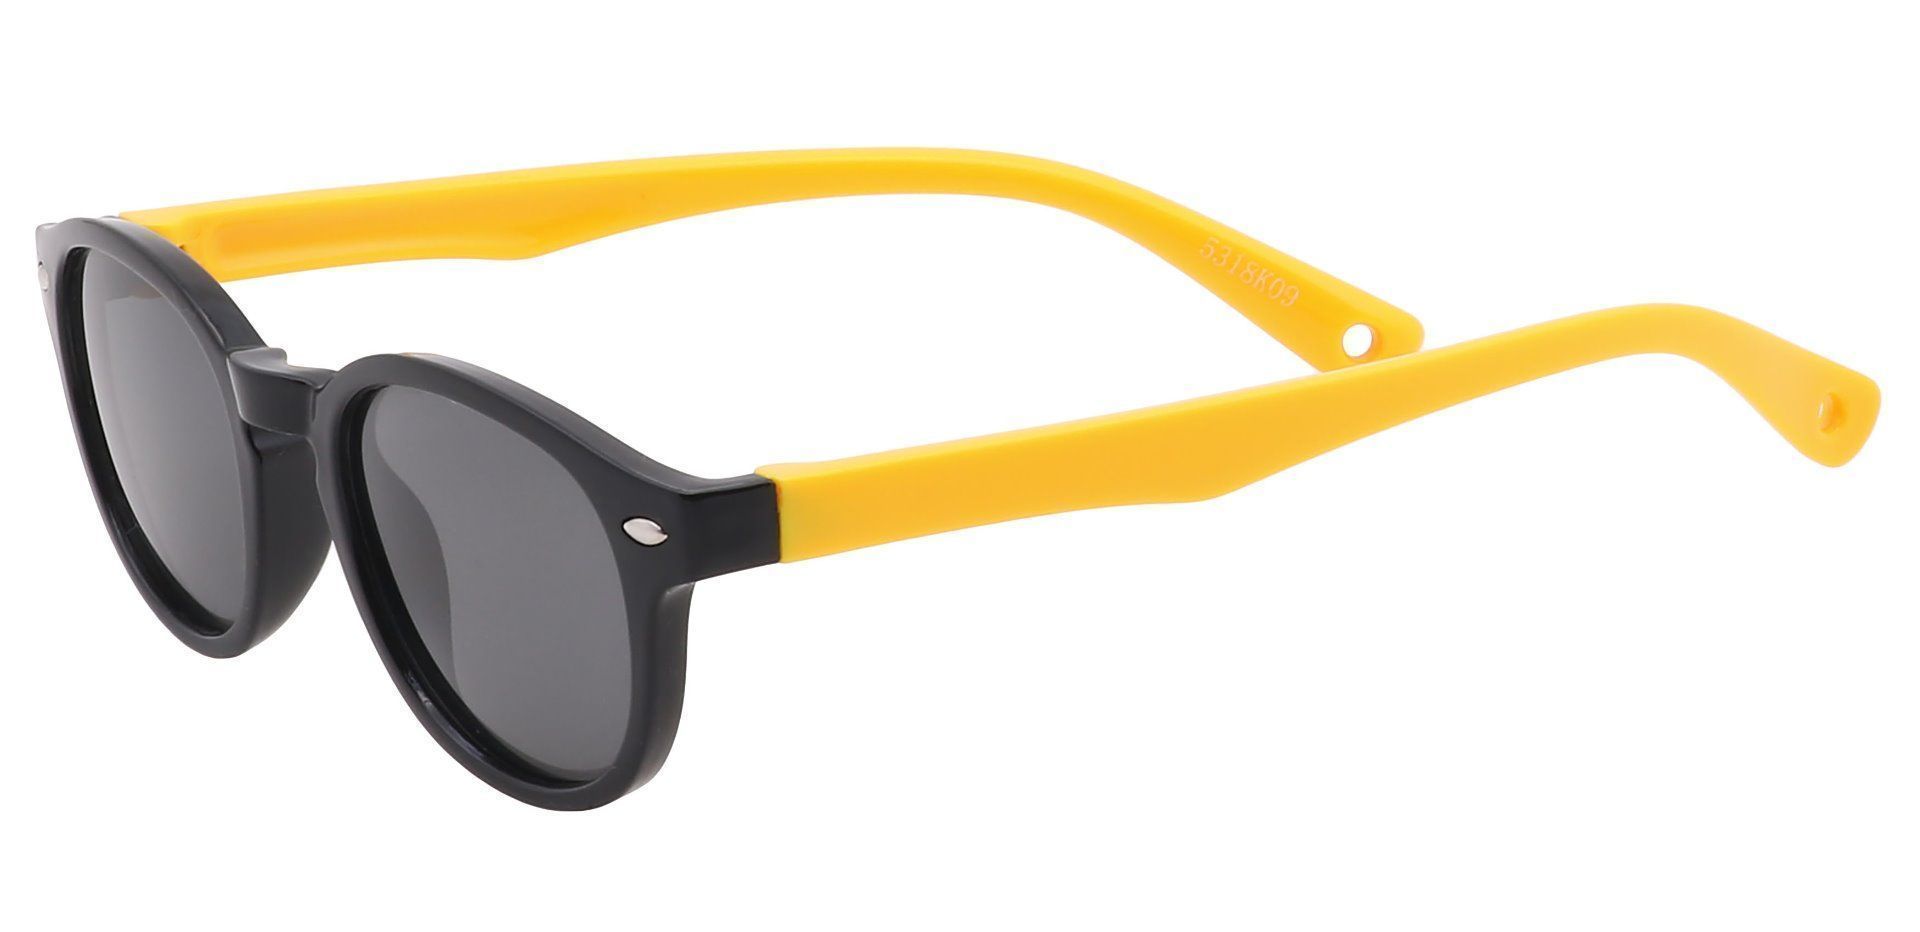 Carbon Round Black Single Vision Sunglasses